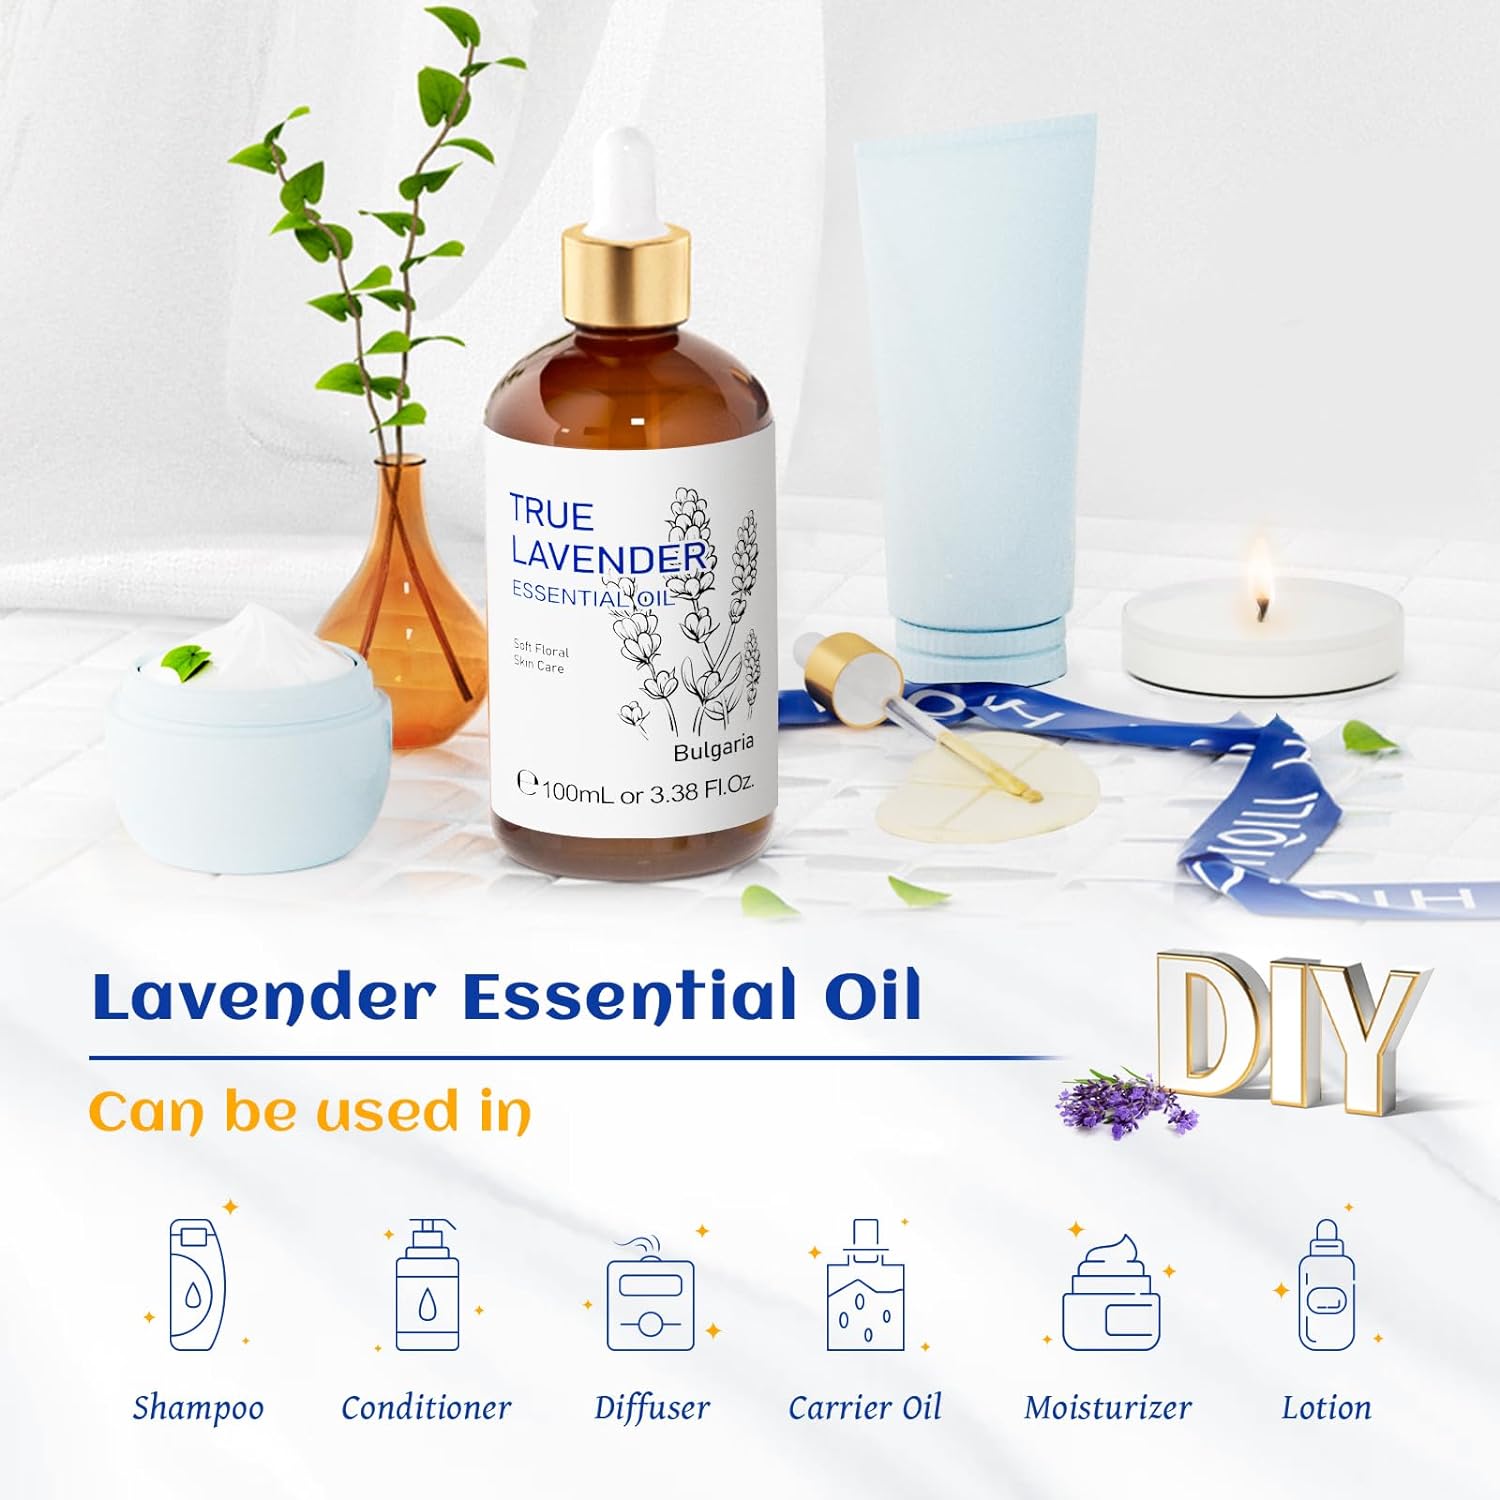 HIQILI 100ML Lavender Essential Oil Pure, 100% Natural for Skin Care, Diffuser?Includes 10ML Travel Bottle - 3.38 Fl Oz : Health & Household